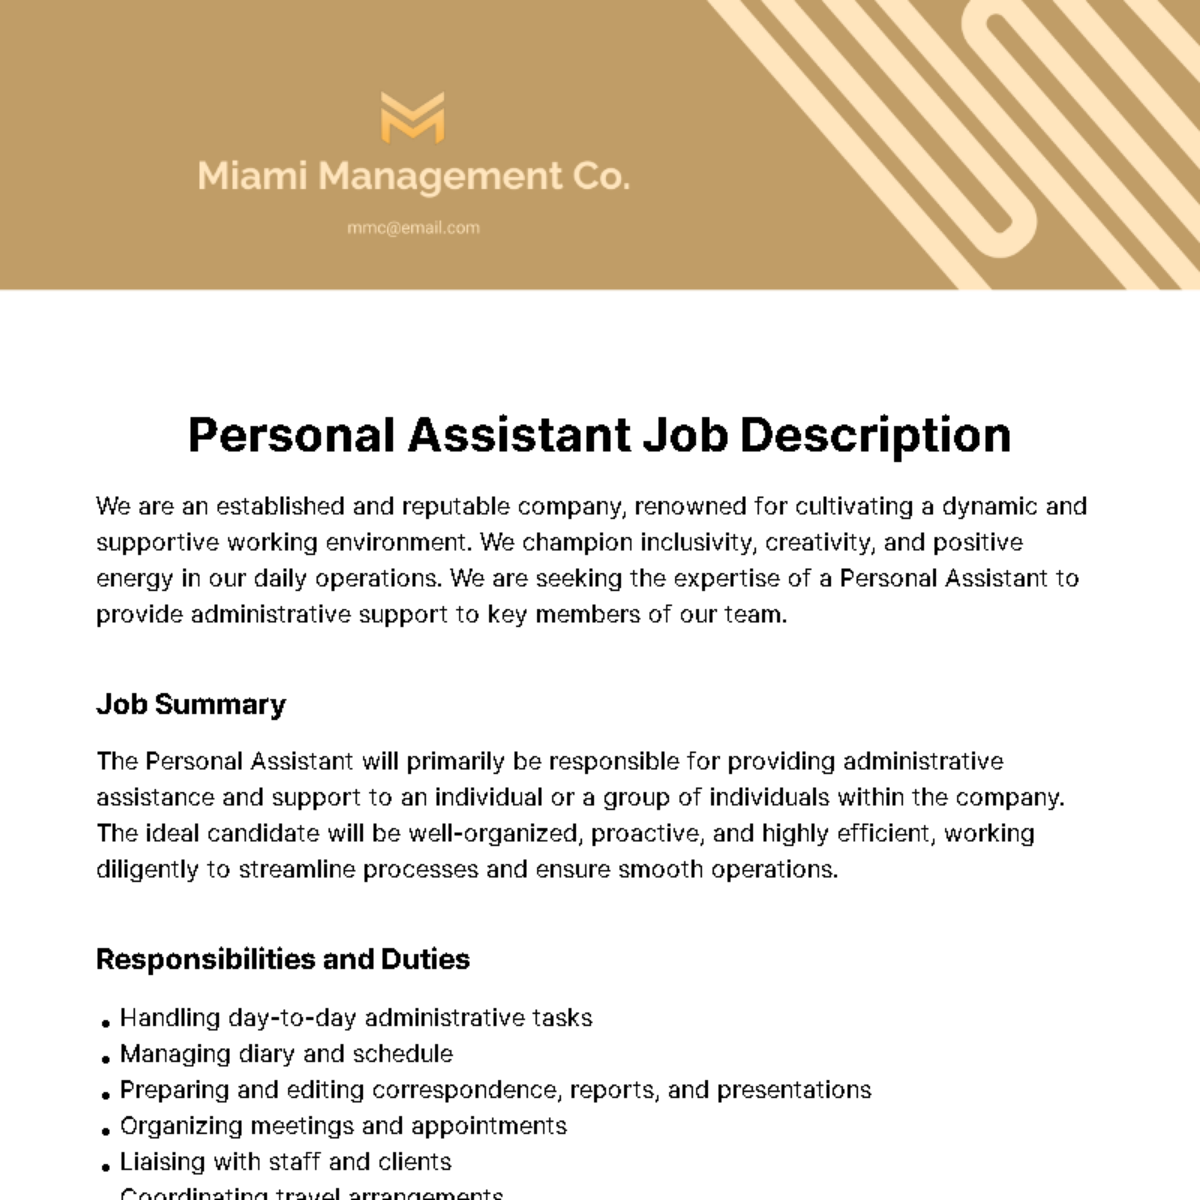 Personal Assistant Job Description Edit Online 